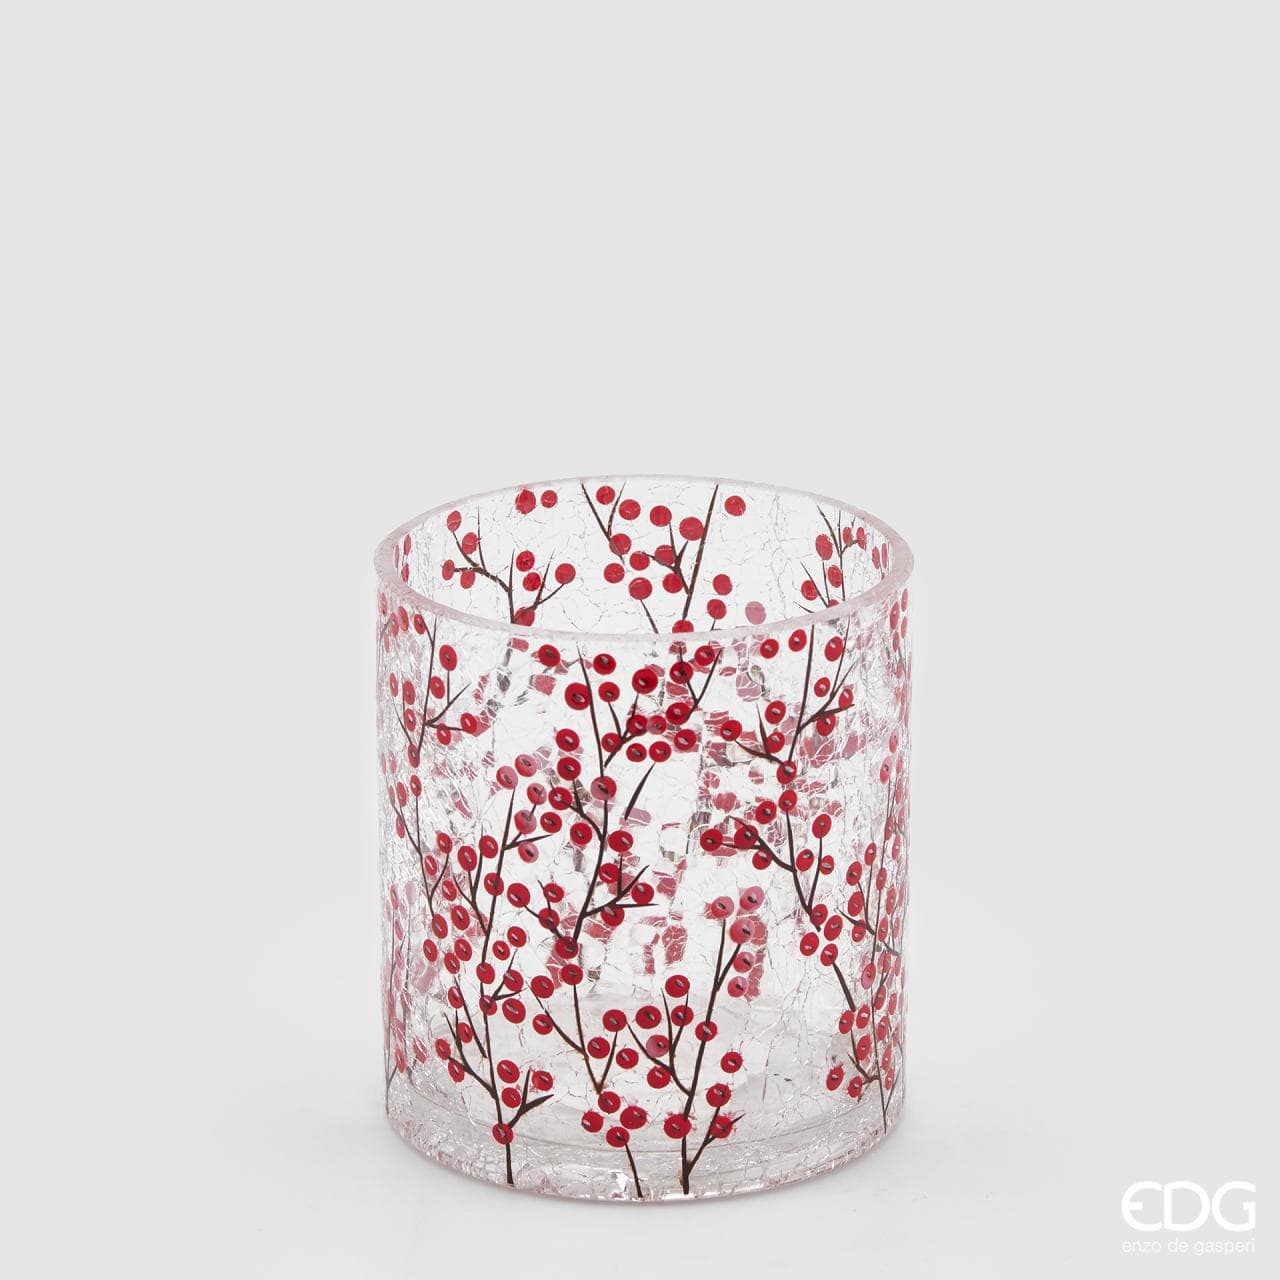 Italiving Kerzenglas Kerzenglas für Teelichter mit roten Beeren und Ästen Höhe 10 cm Ø 9 cm